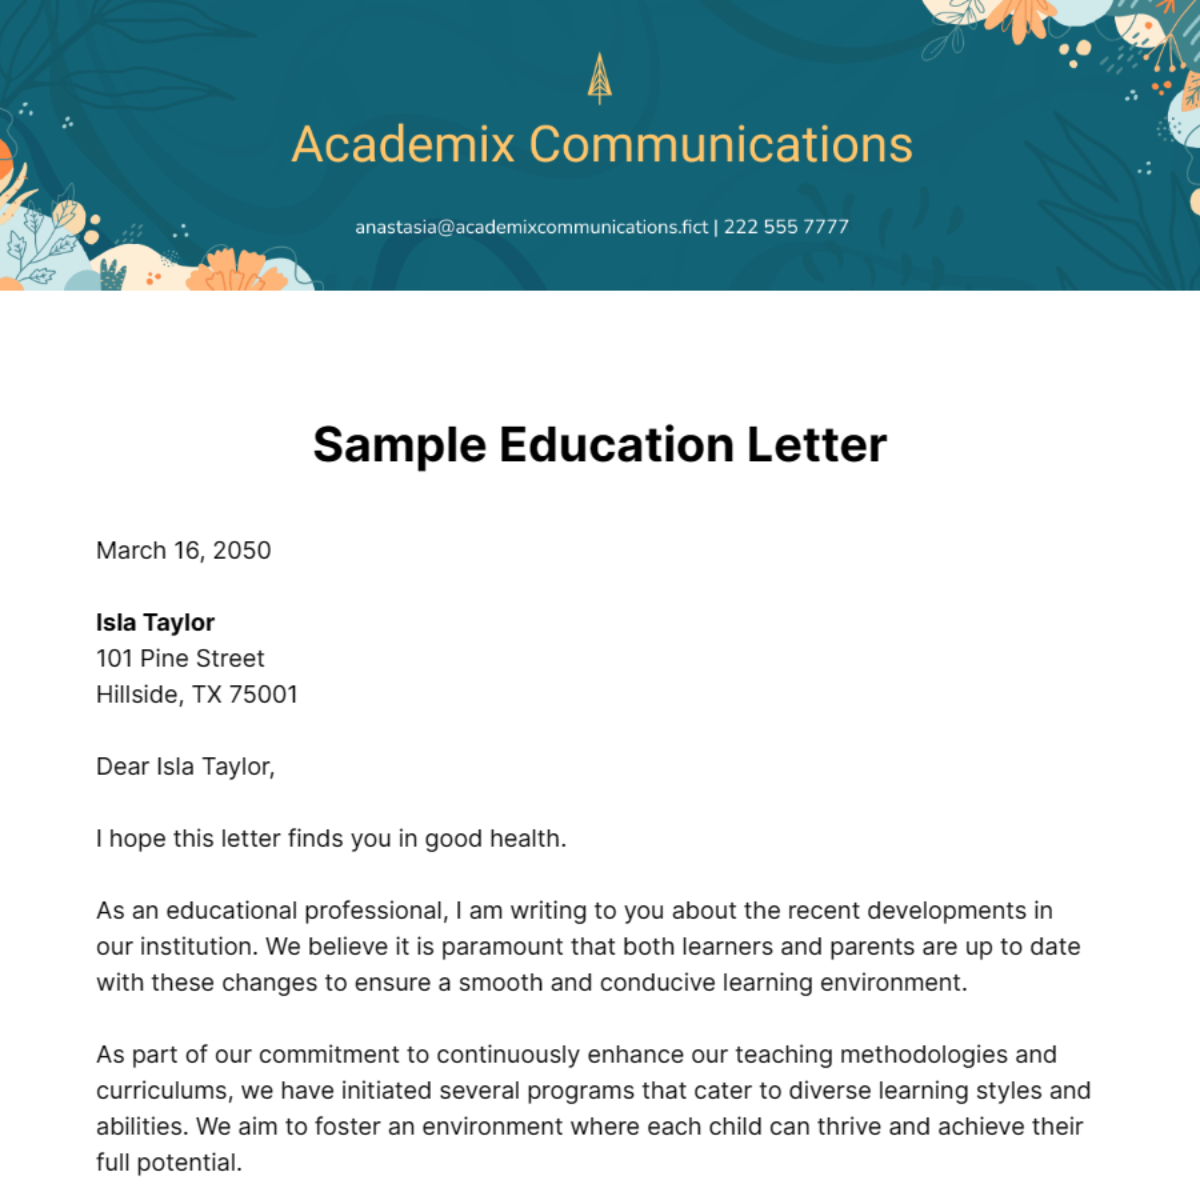 Sample Education Letter Template